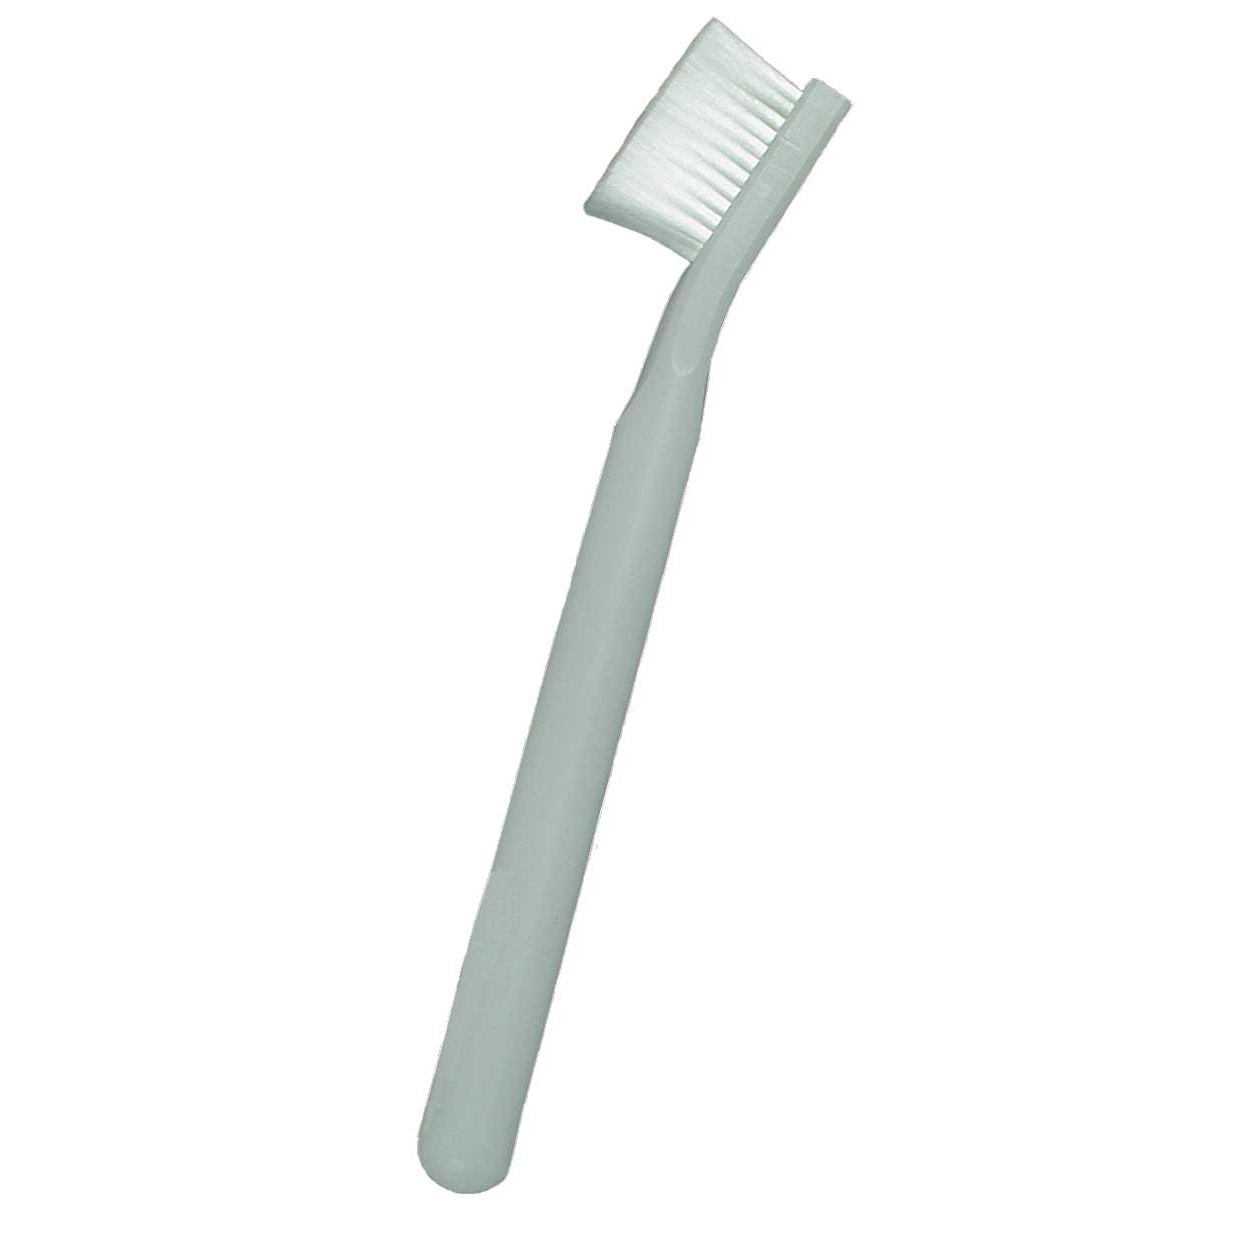 https://www.gordonbrush.com/productphotos/3-x-11-row-0003-soft-nylon-bristle-and-acetal-handle-brush-33nd-003-388.jpg